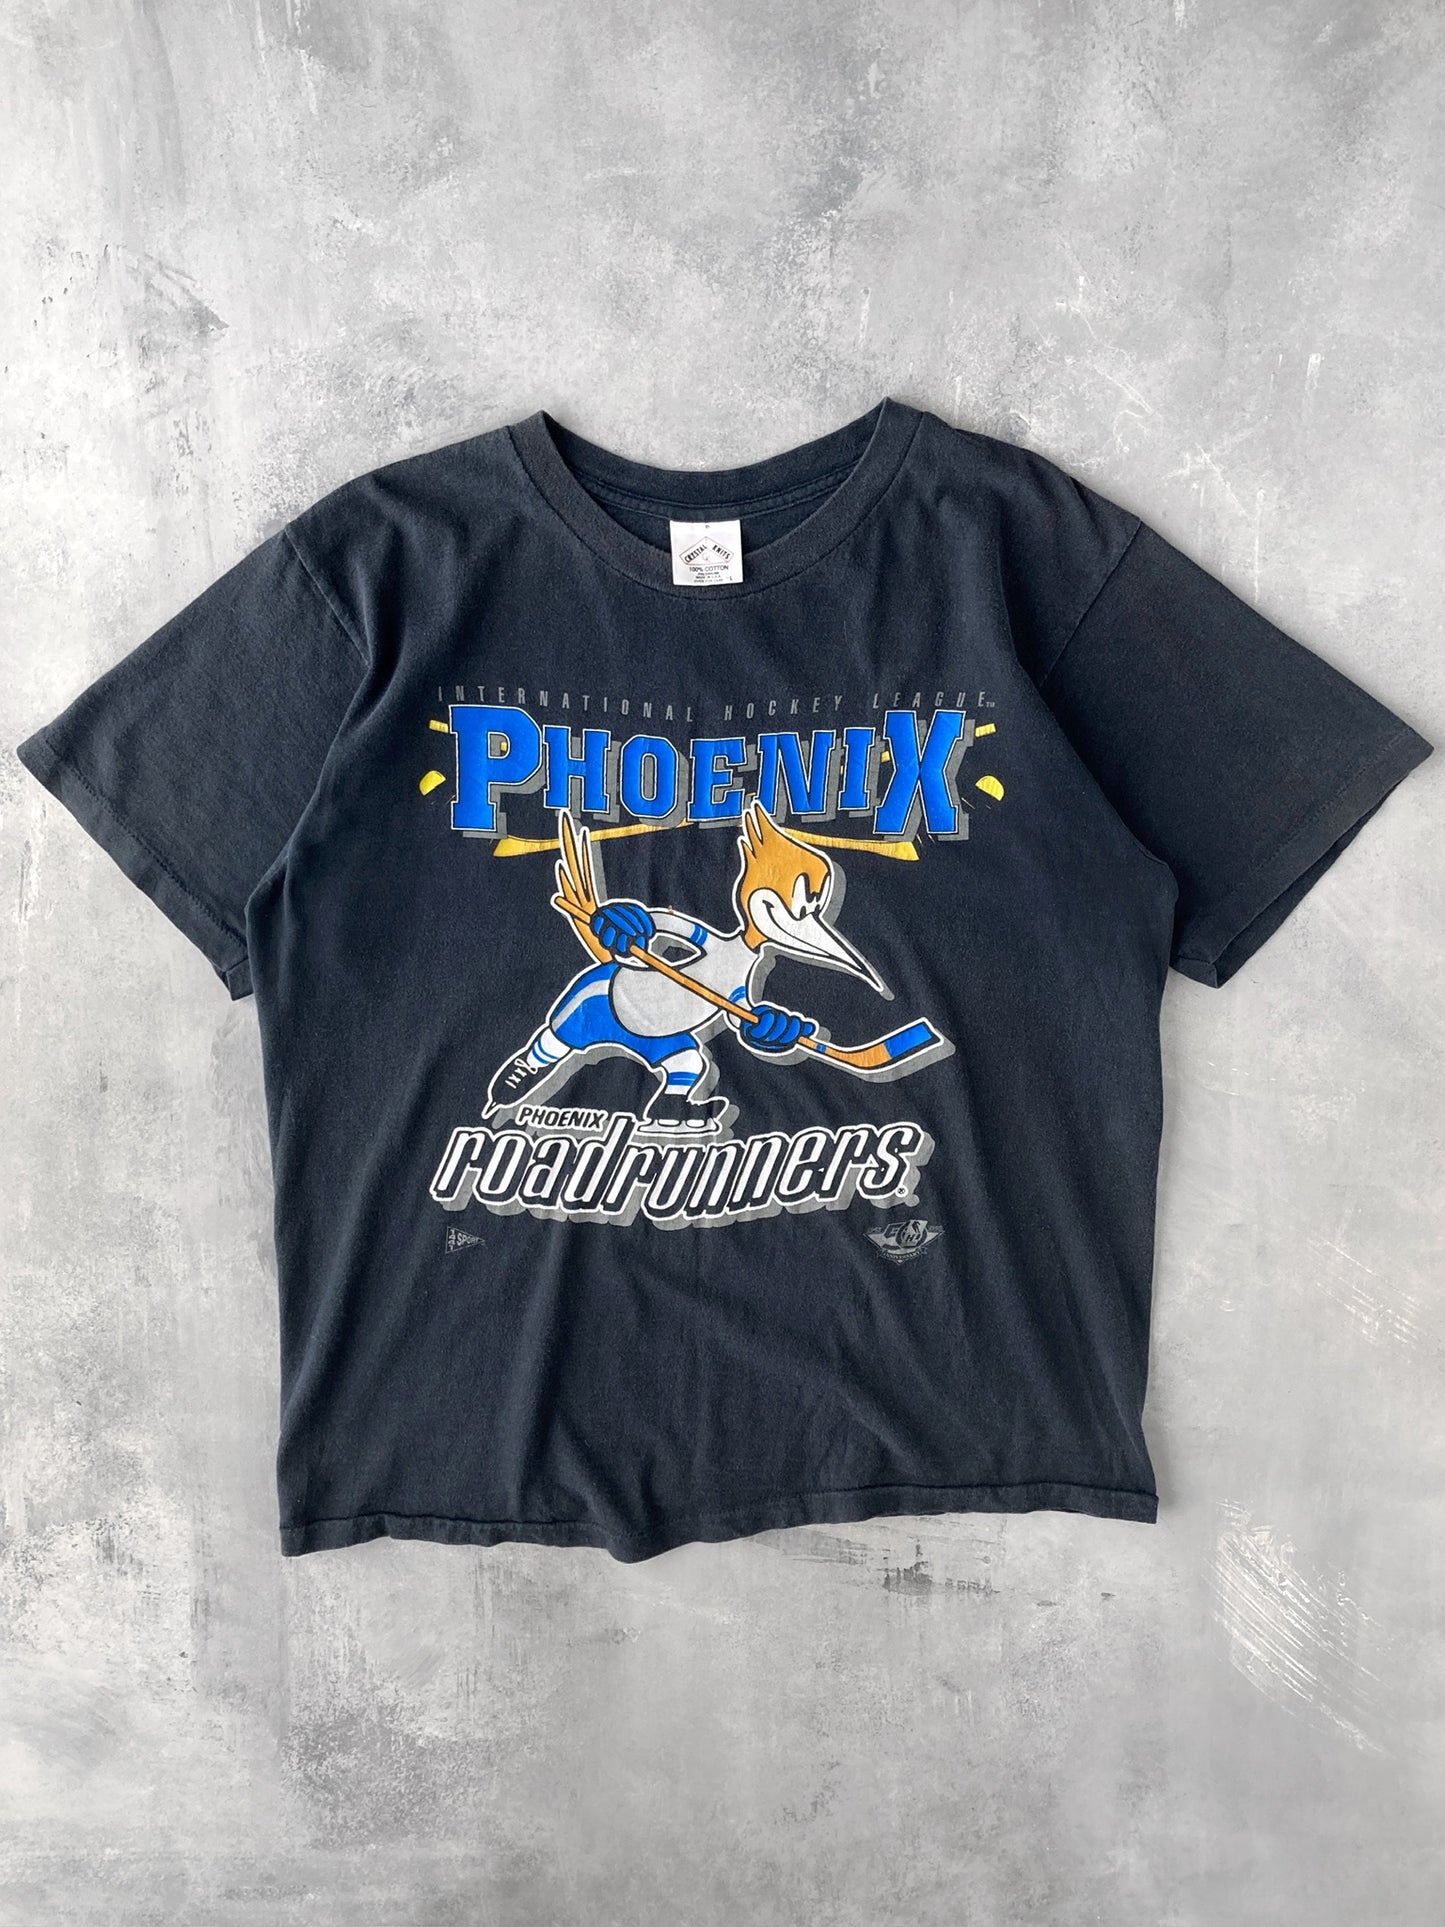 Phoenix Roadrunners T-Shirt '95 - Large / XL